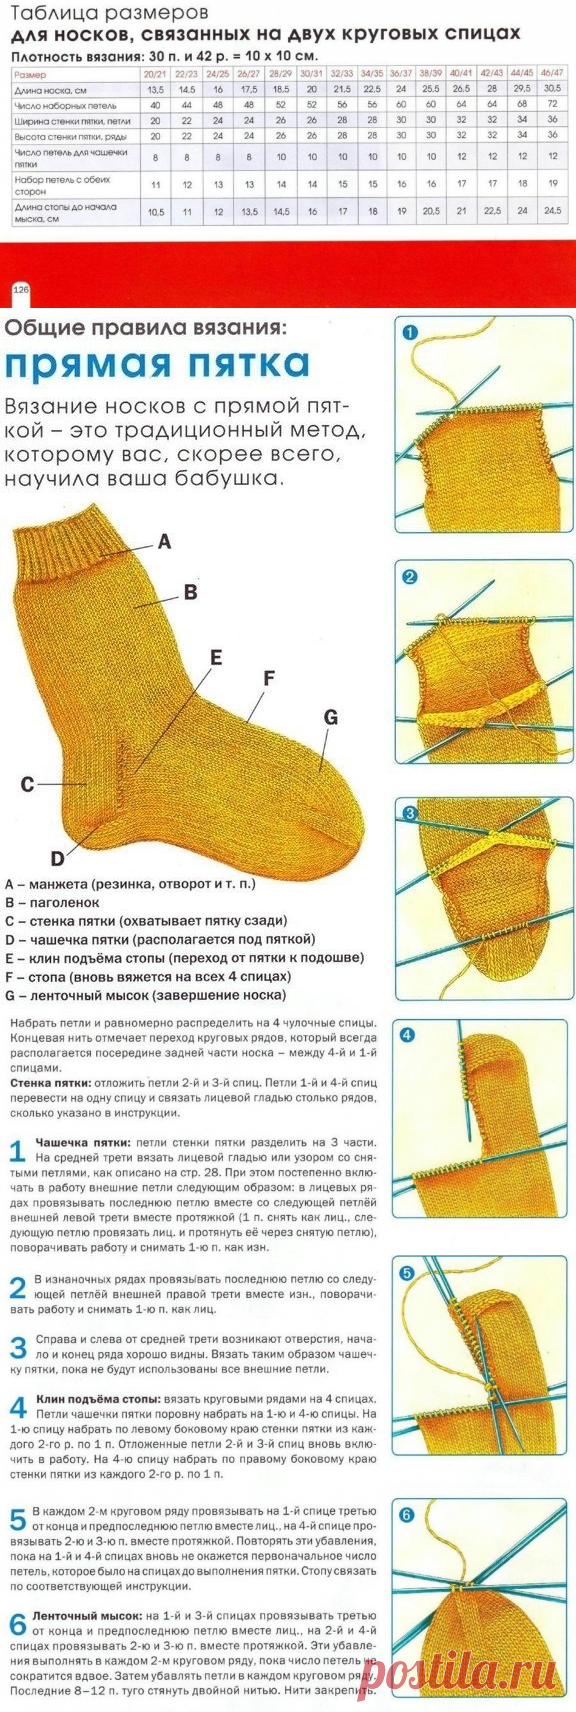 Как вязать пятку для носка спицами